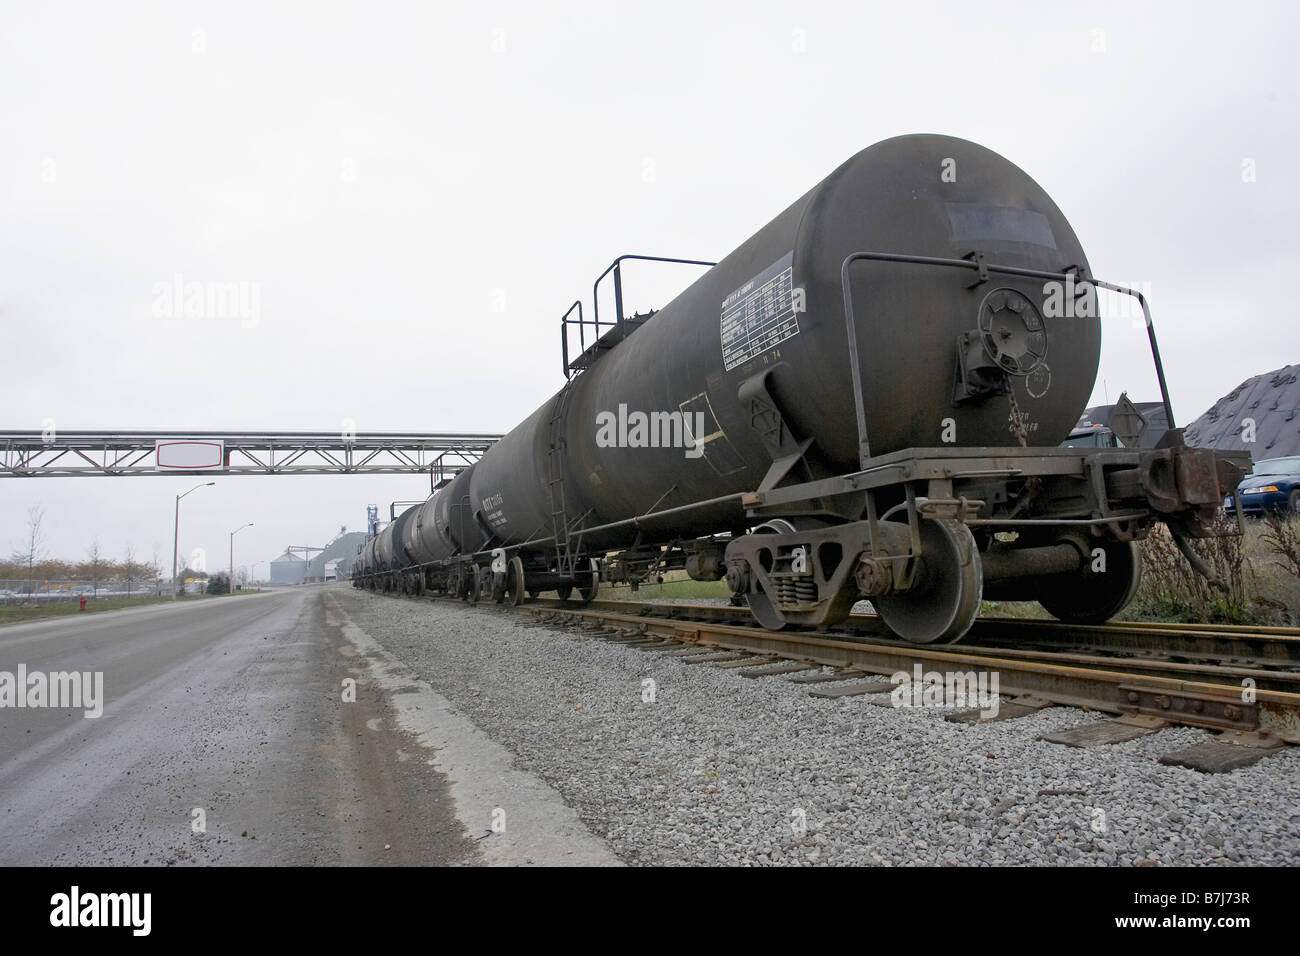 Train alongside empty road in industrial setting, Hamilton, Ontario. Stock Photo